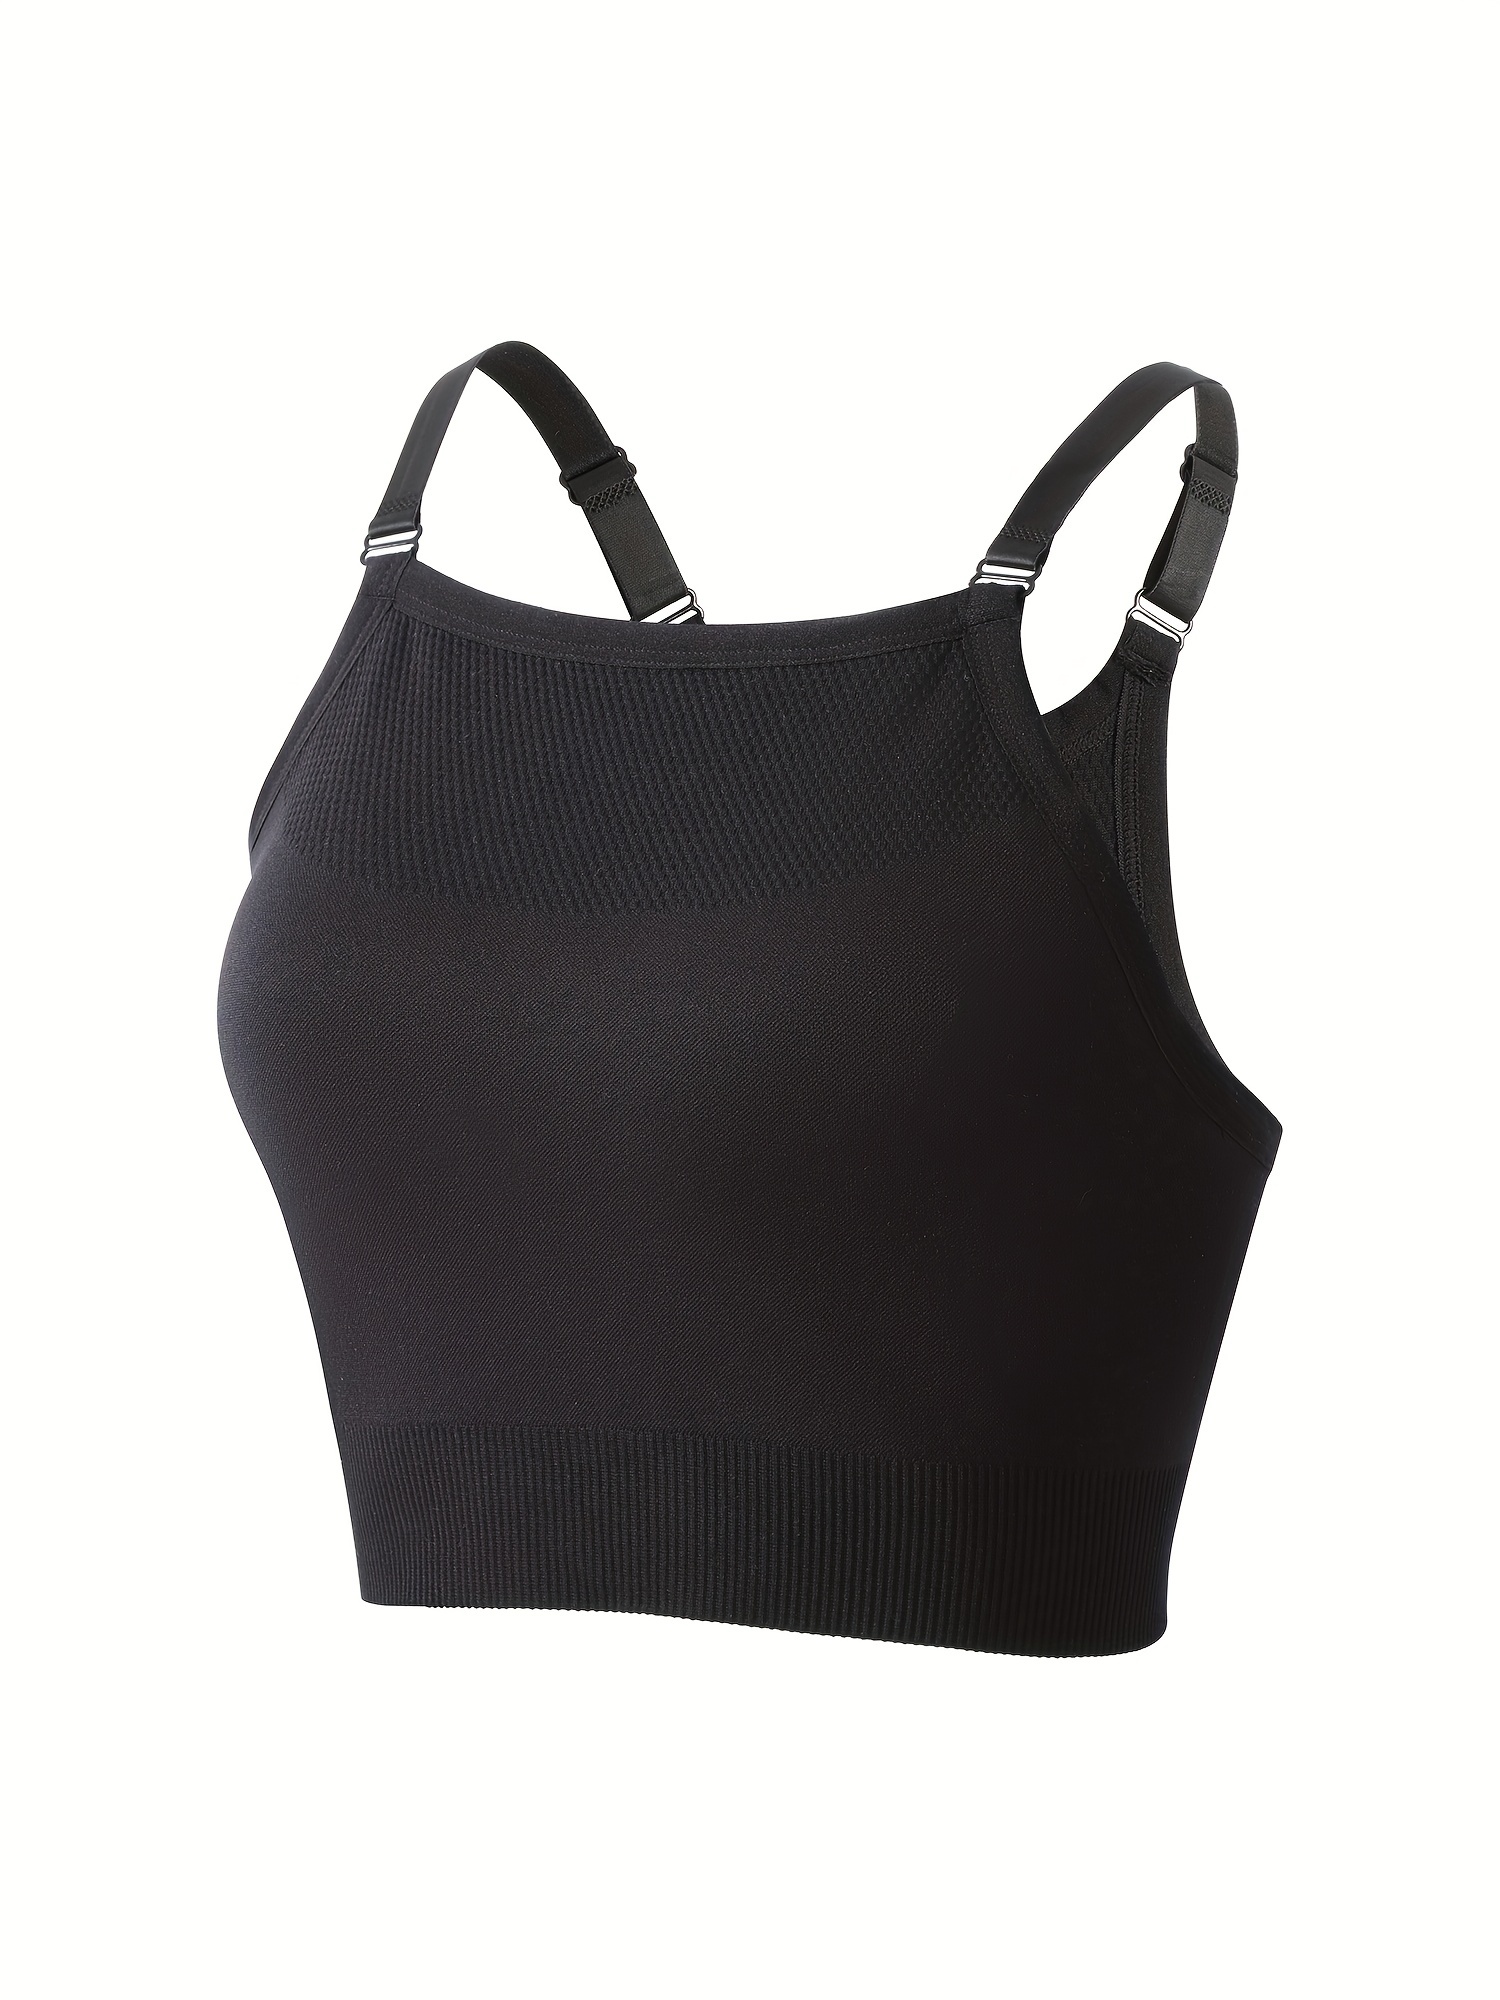 Jianghuo 3pcs Super Comfort Bra,womens Sports Bras Removable Pads Plus Size  Sleep Bras For Girls In Yoga Bralette Leisure Stretch Crop Tops Vest,black